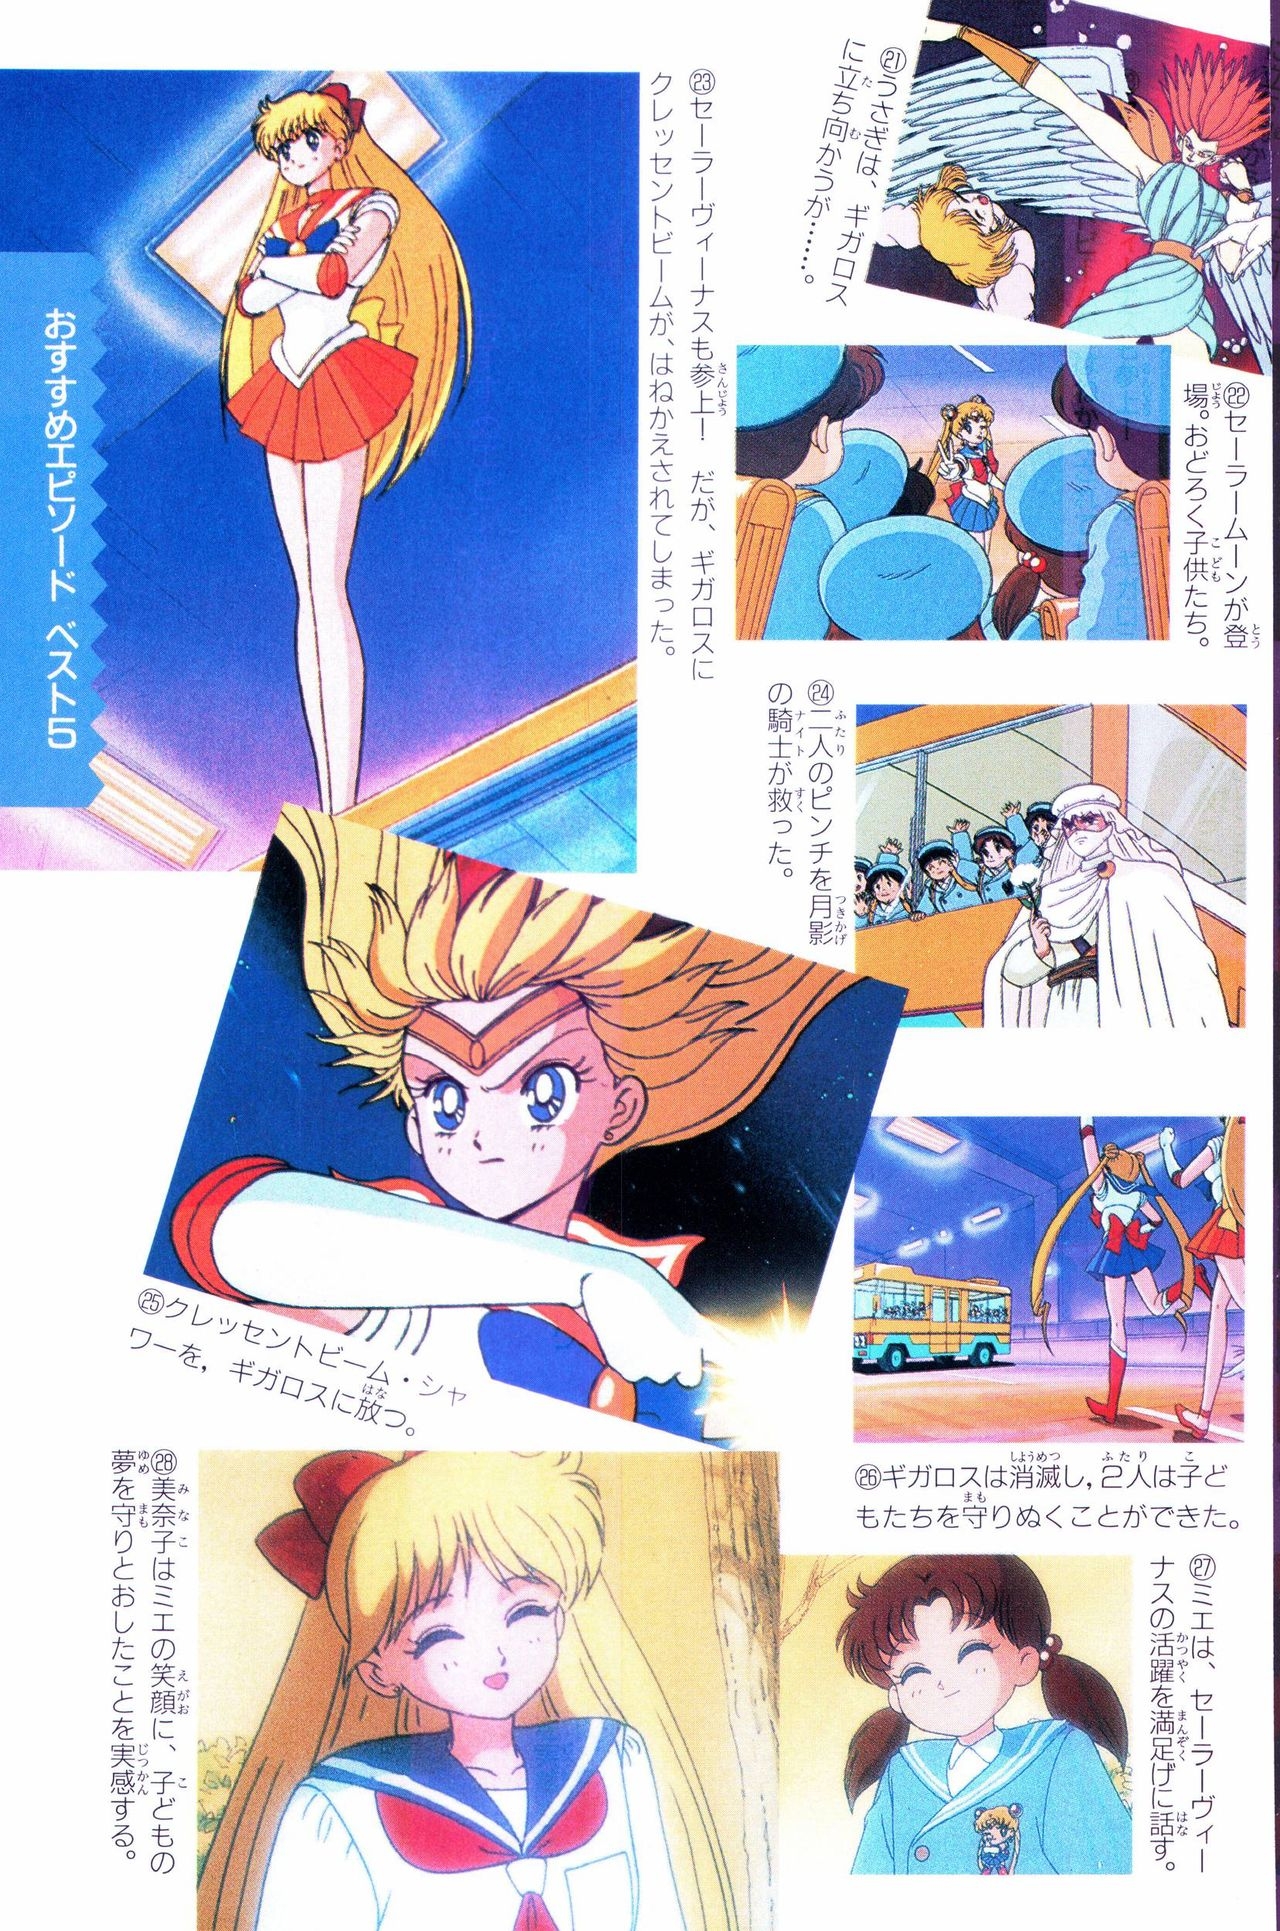 Sailor Moon Official Fan Book - Sailor Venus 55